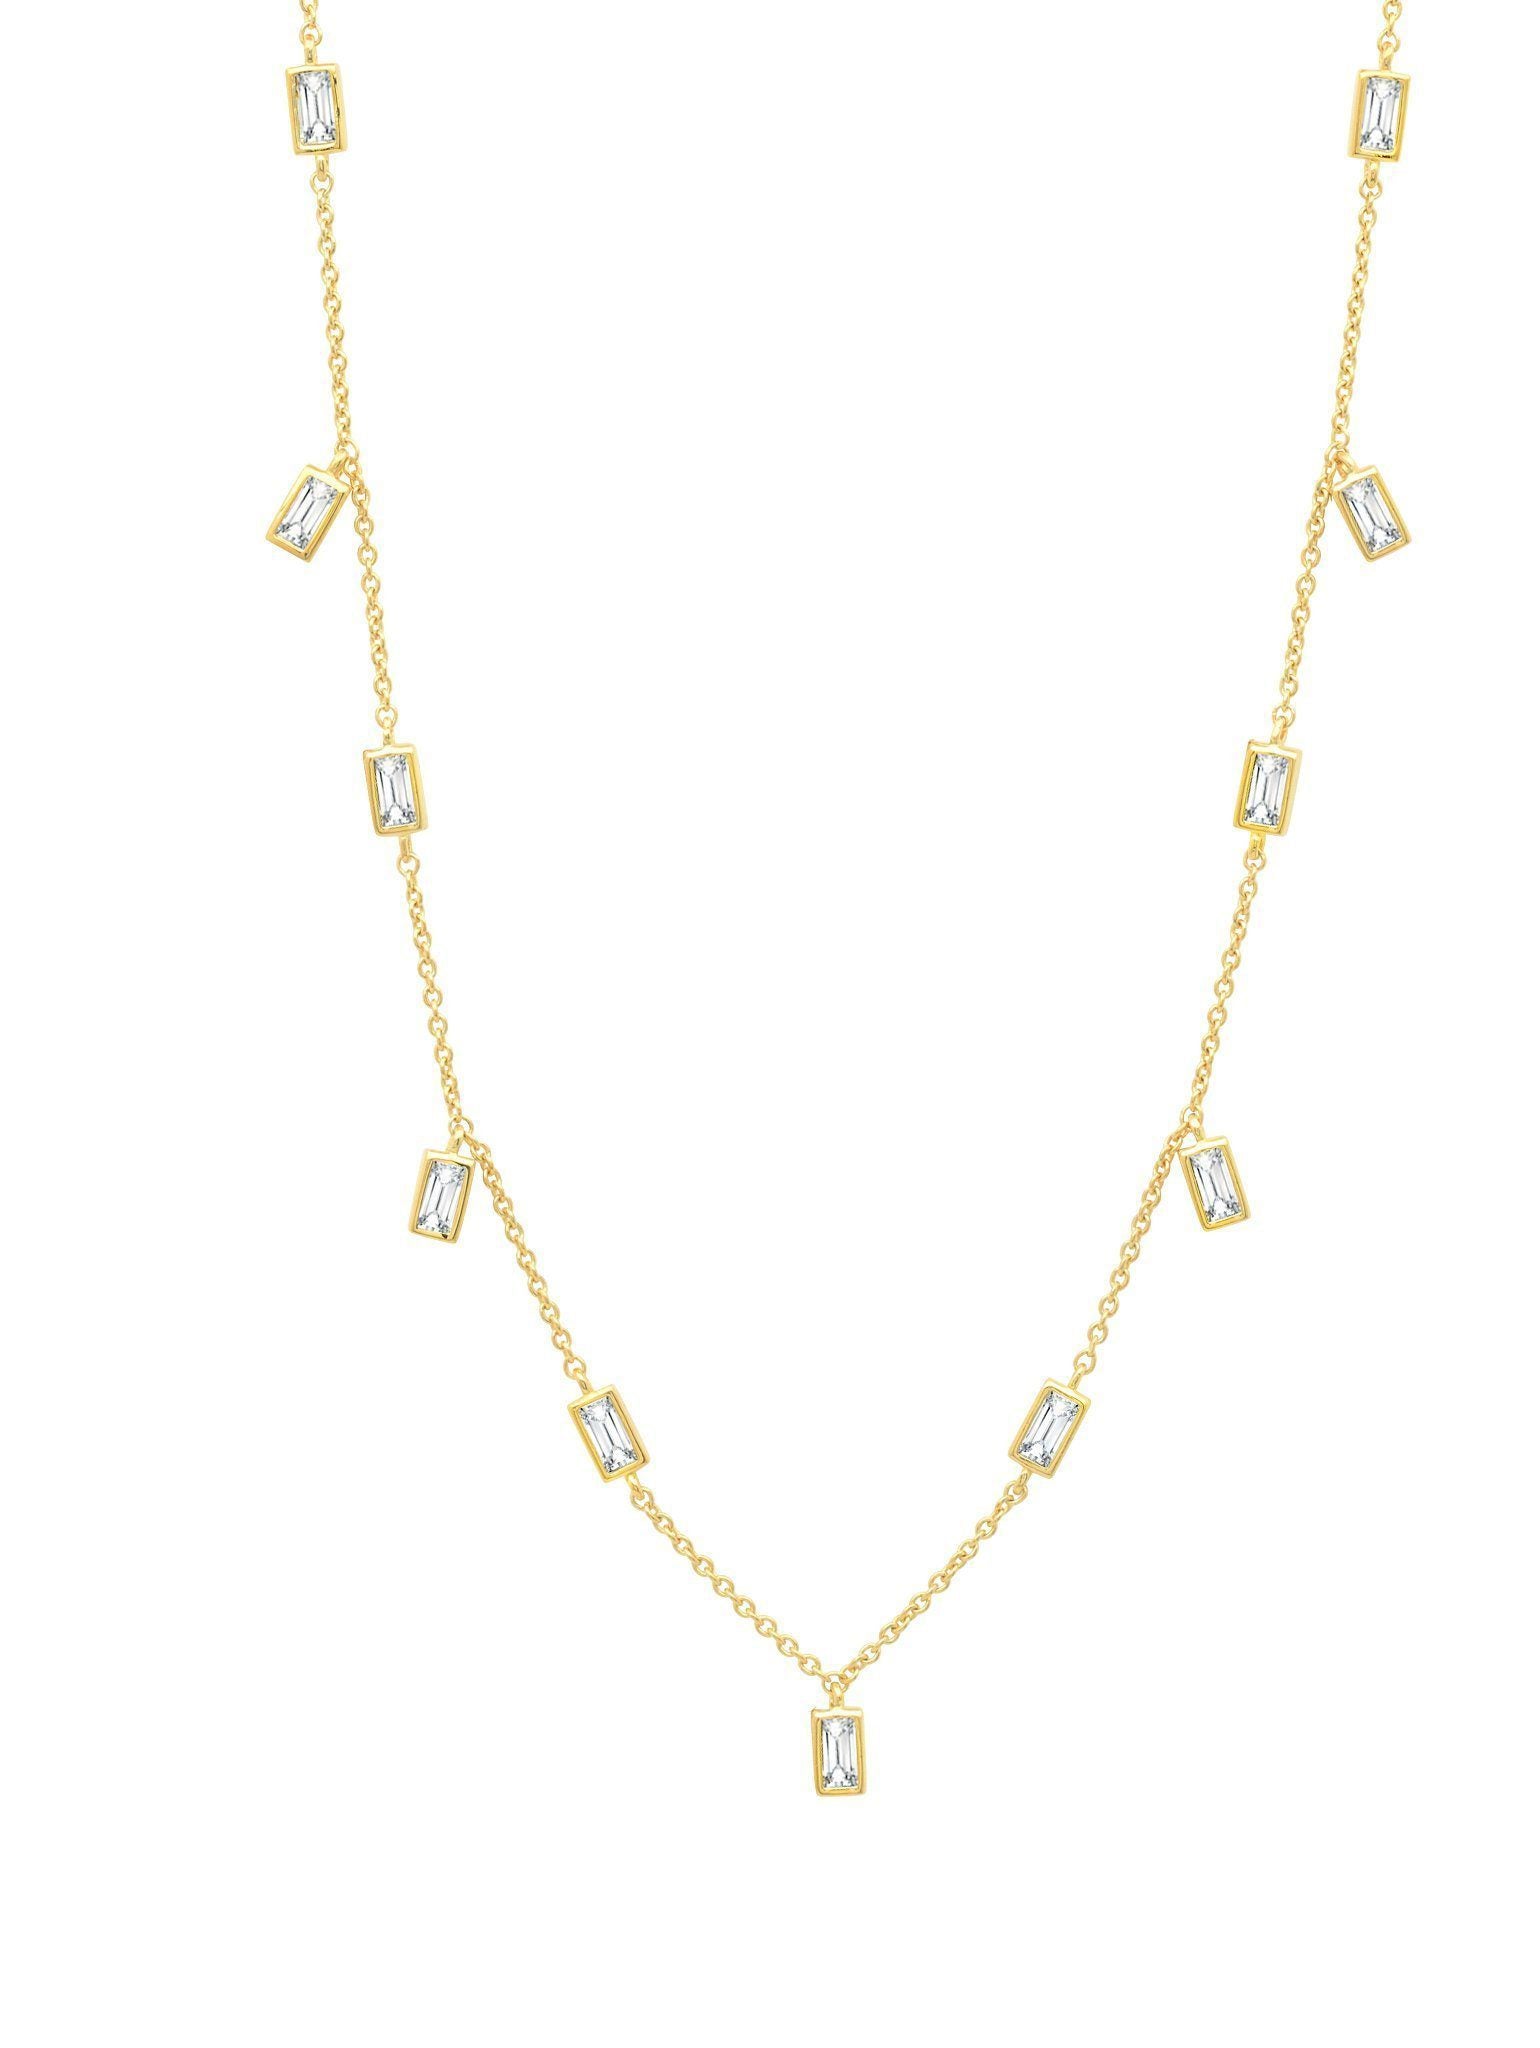 Crislu Jewelry Crislu Prism Baguette 16" Necklace finished in 18KT Gold